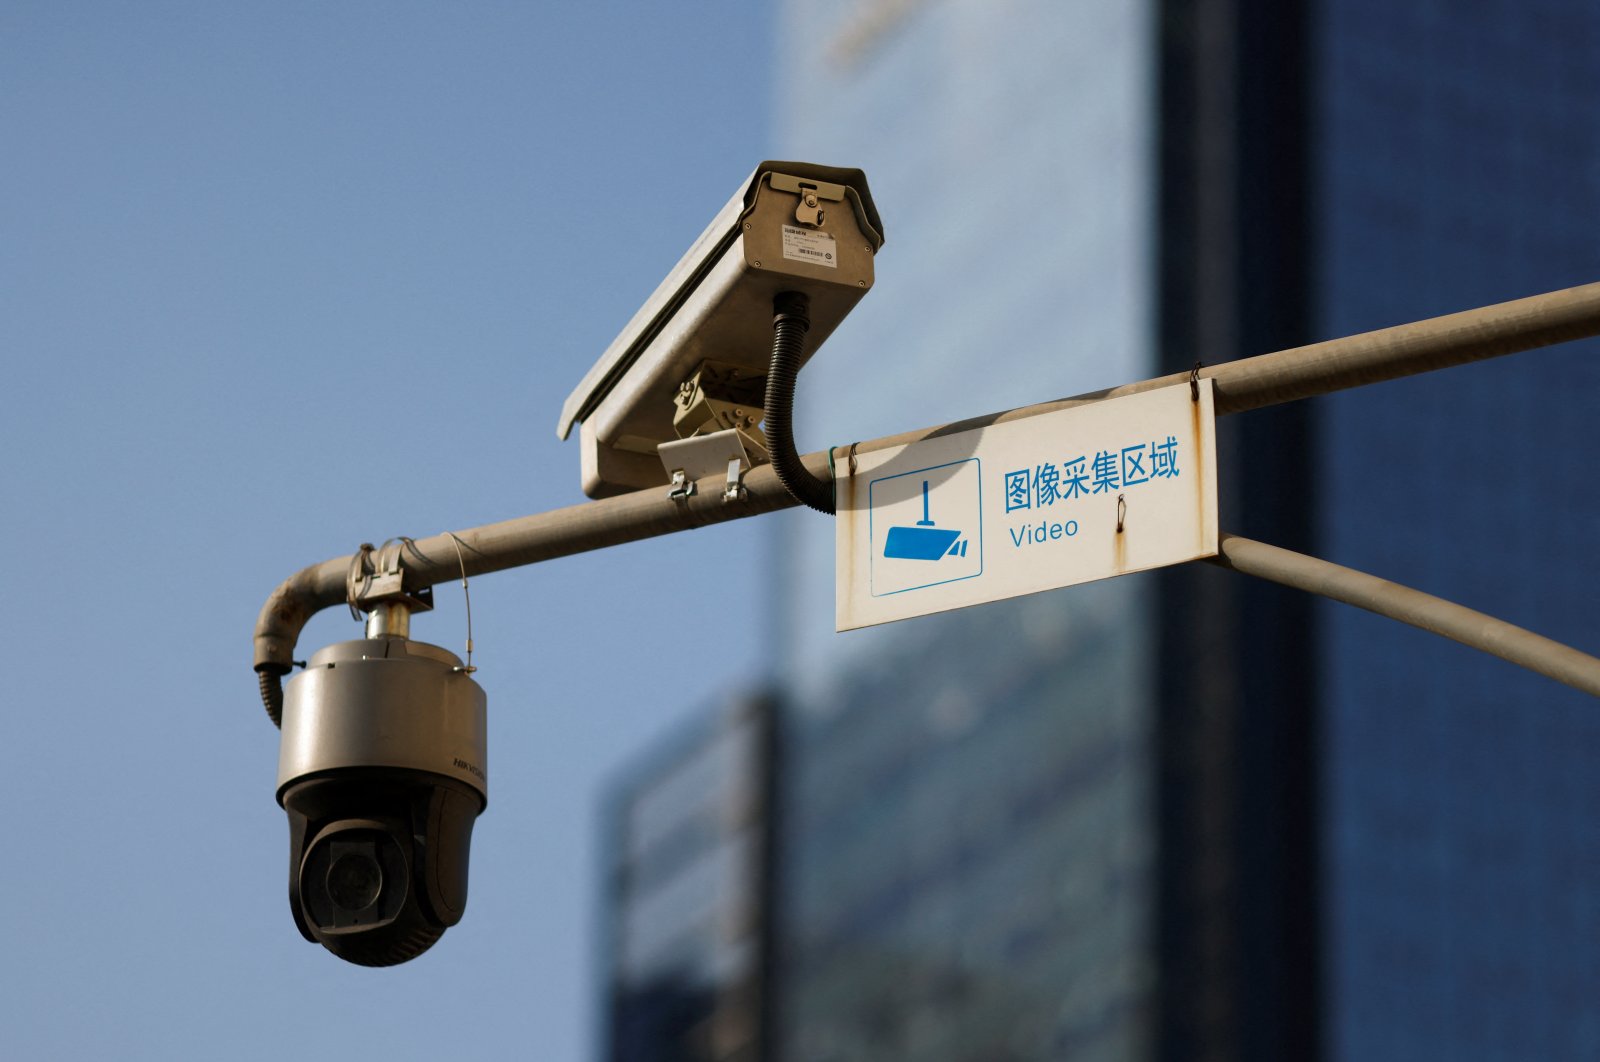 London dipanggil untuk mengklarifikasi kebijakan tentang penggunaan kamera CCTV China